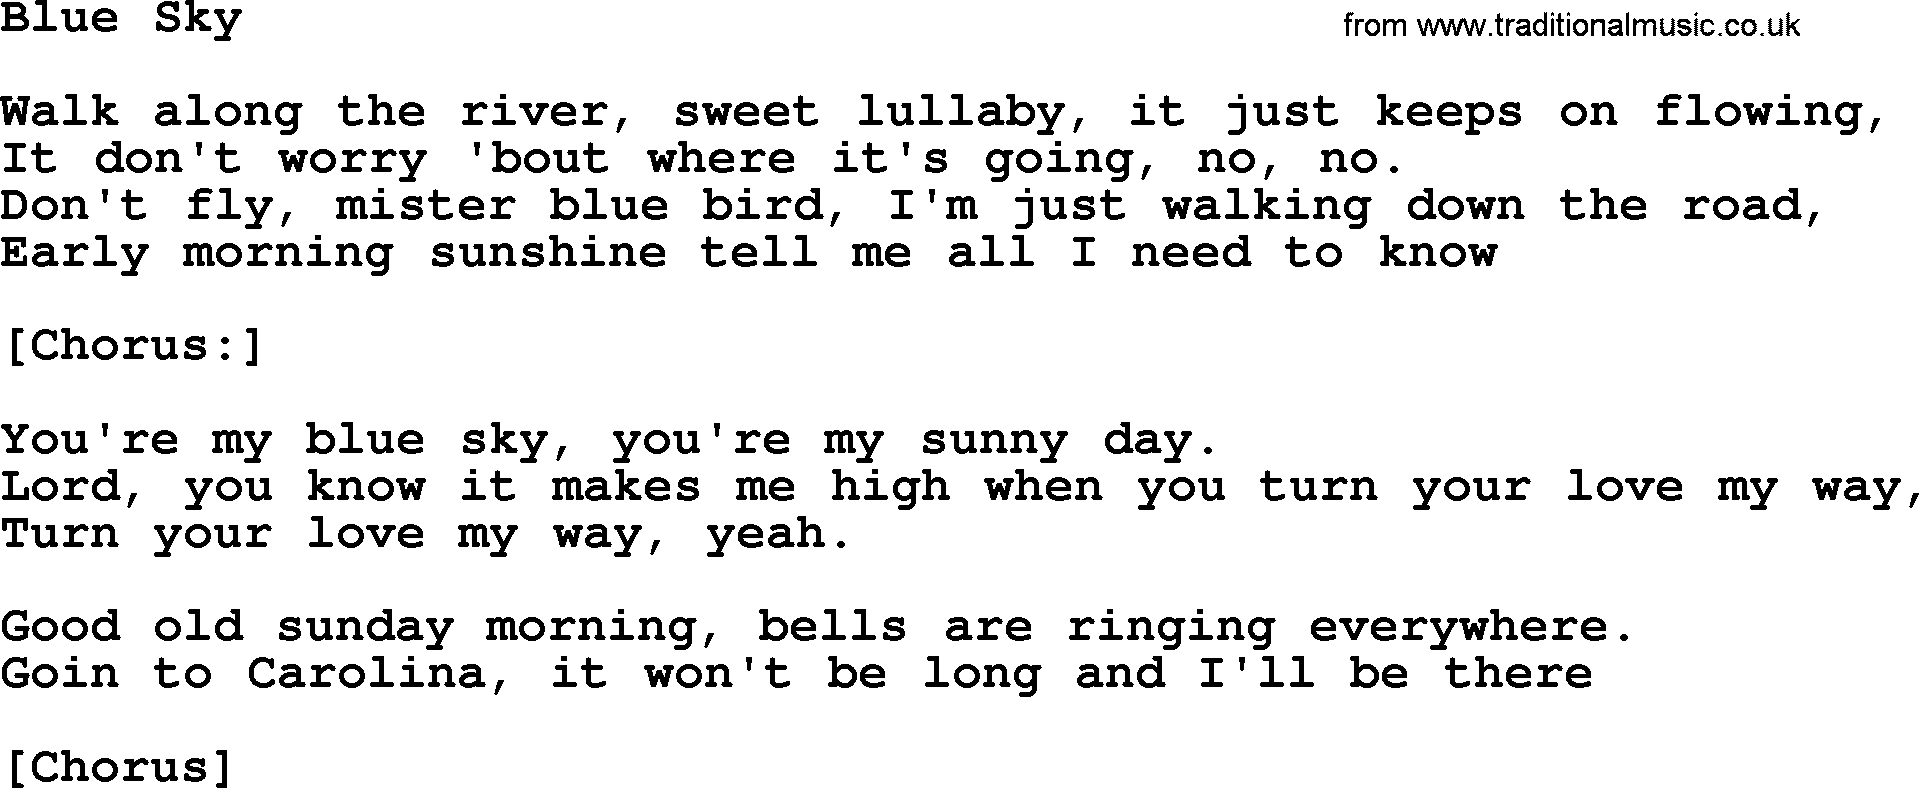 Joan Baez song Blue Sky, lyrics